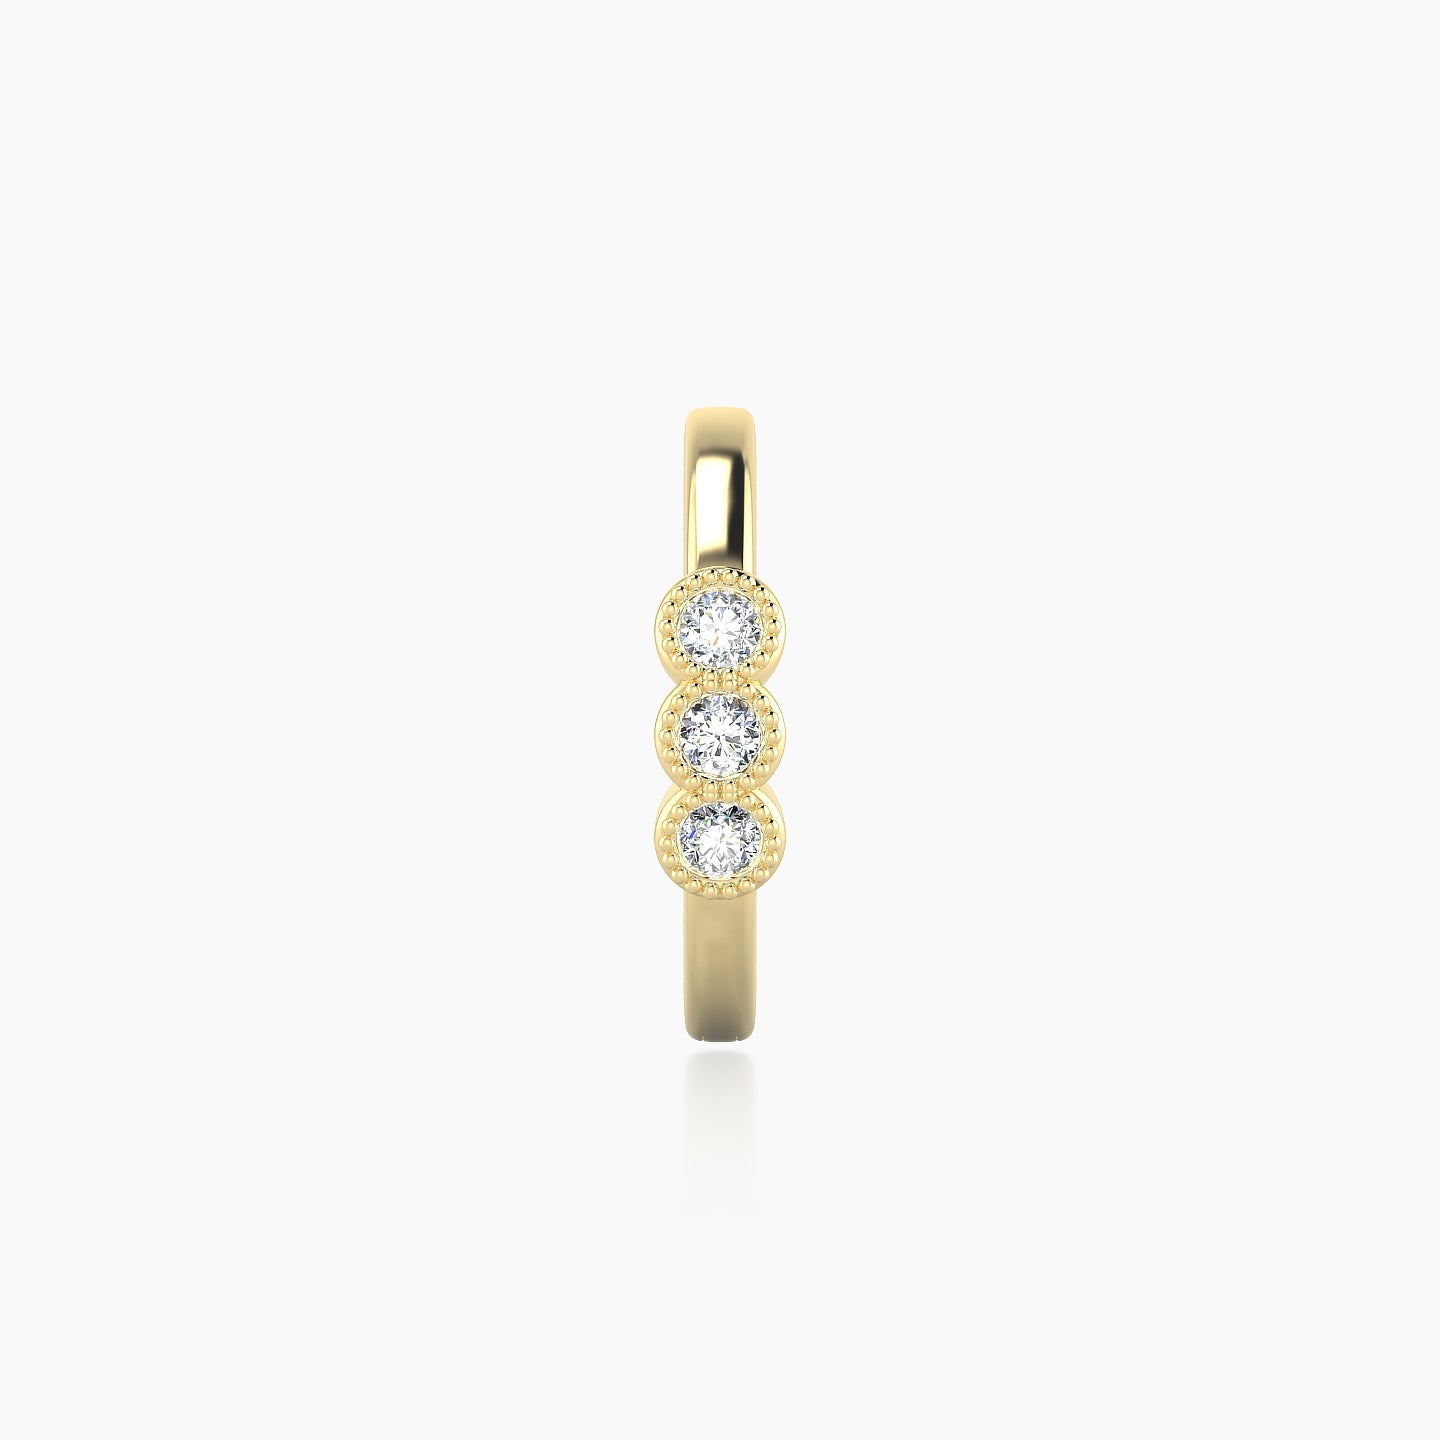 Irene | 18k Yellow Gold 9.5 mm Trilogy Diamond Nose Ring Piercing